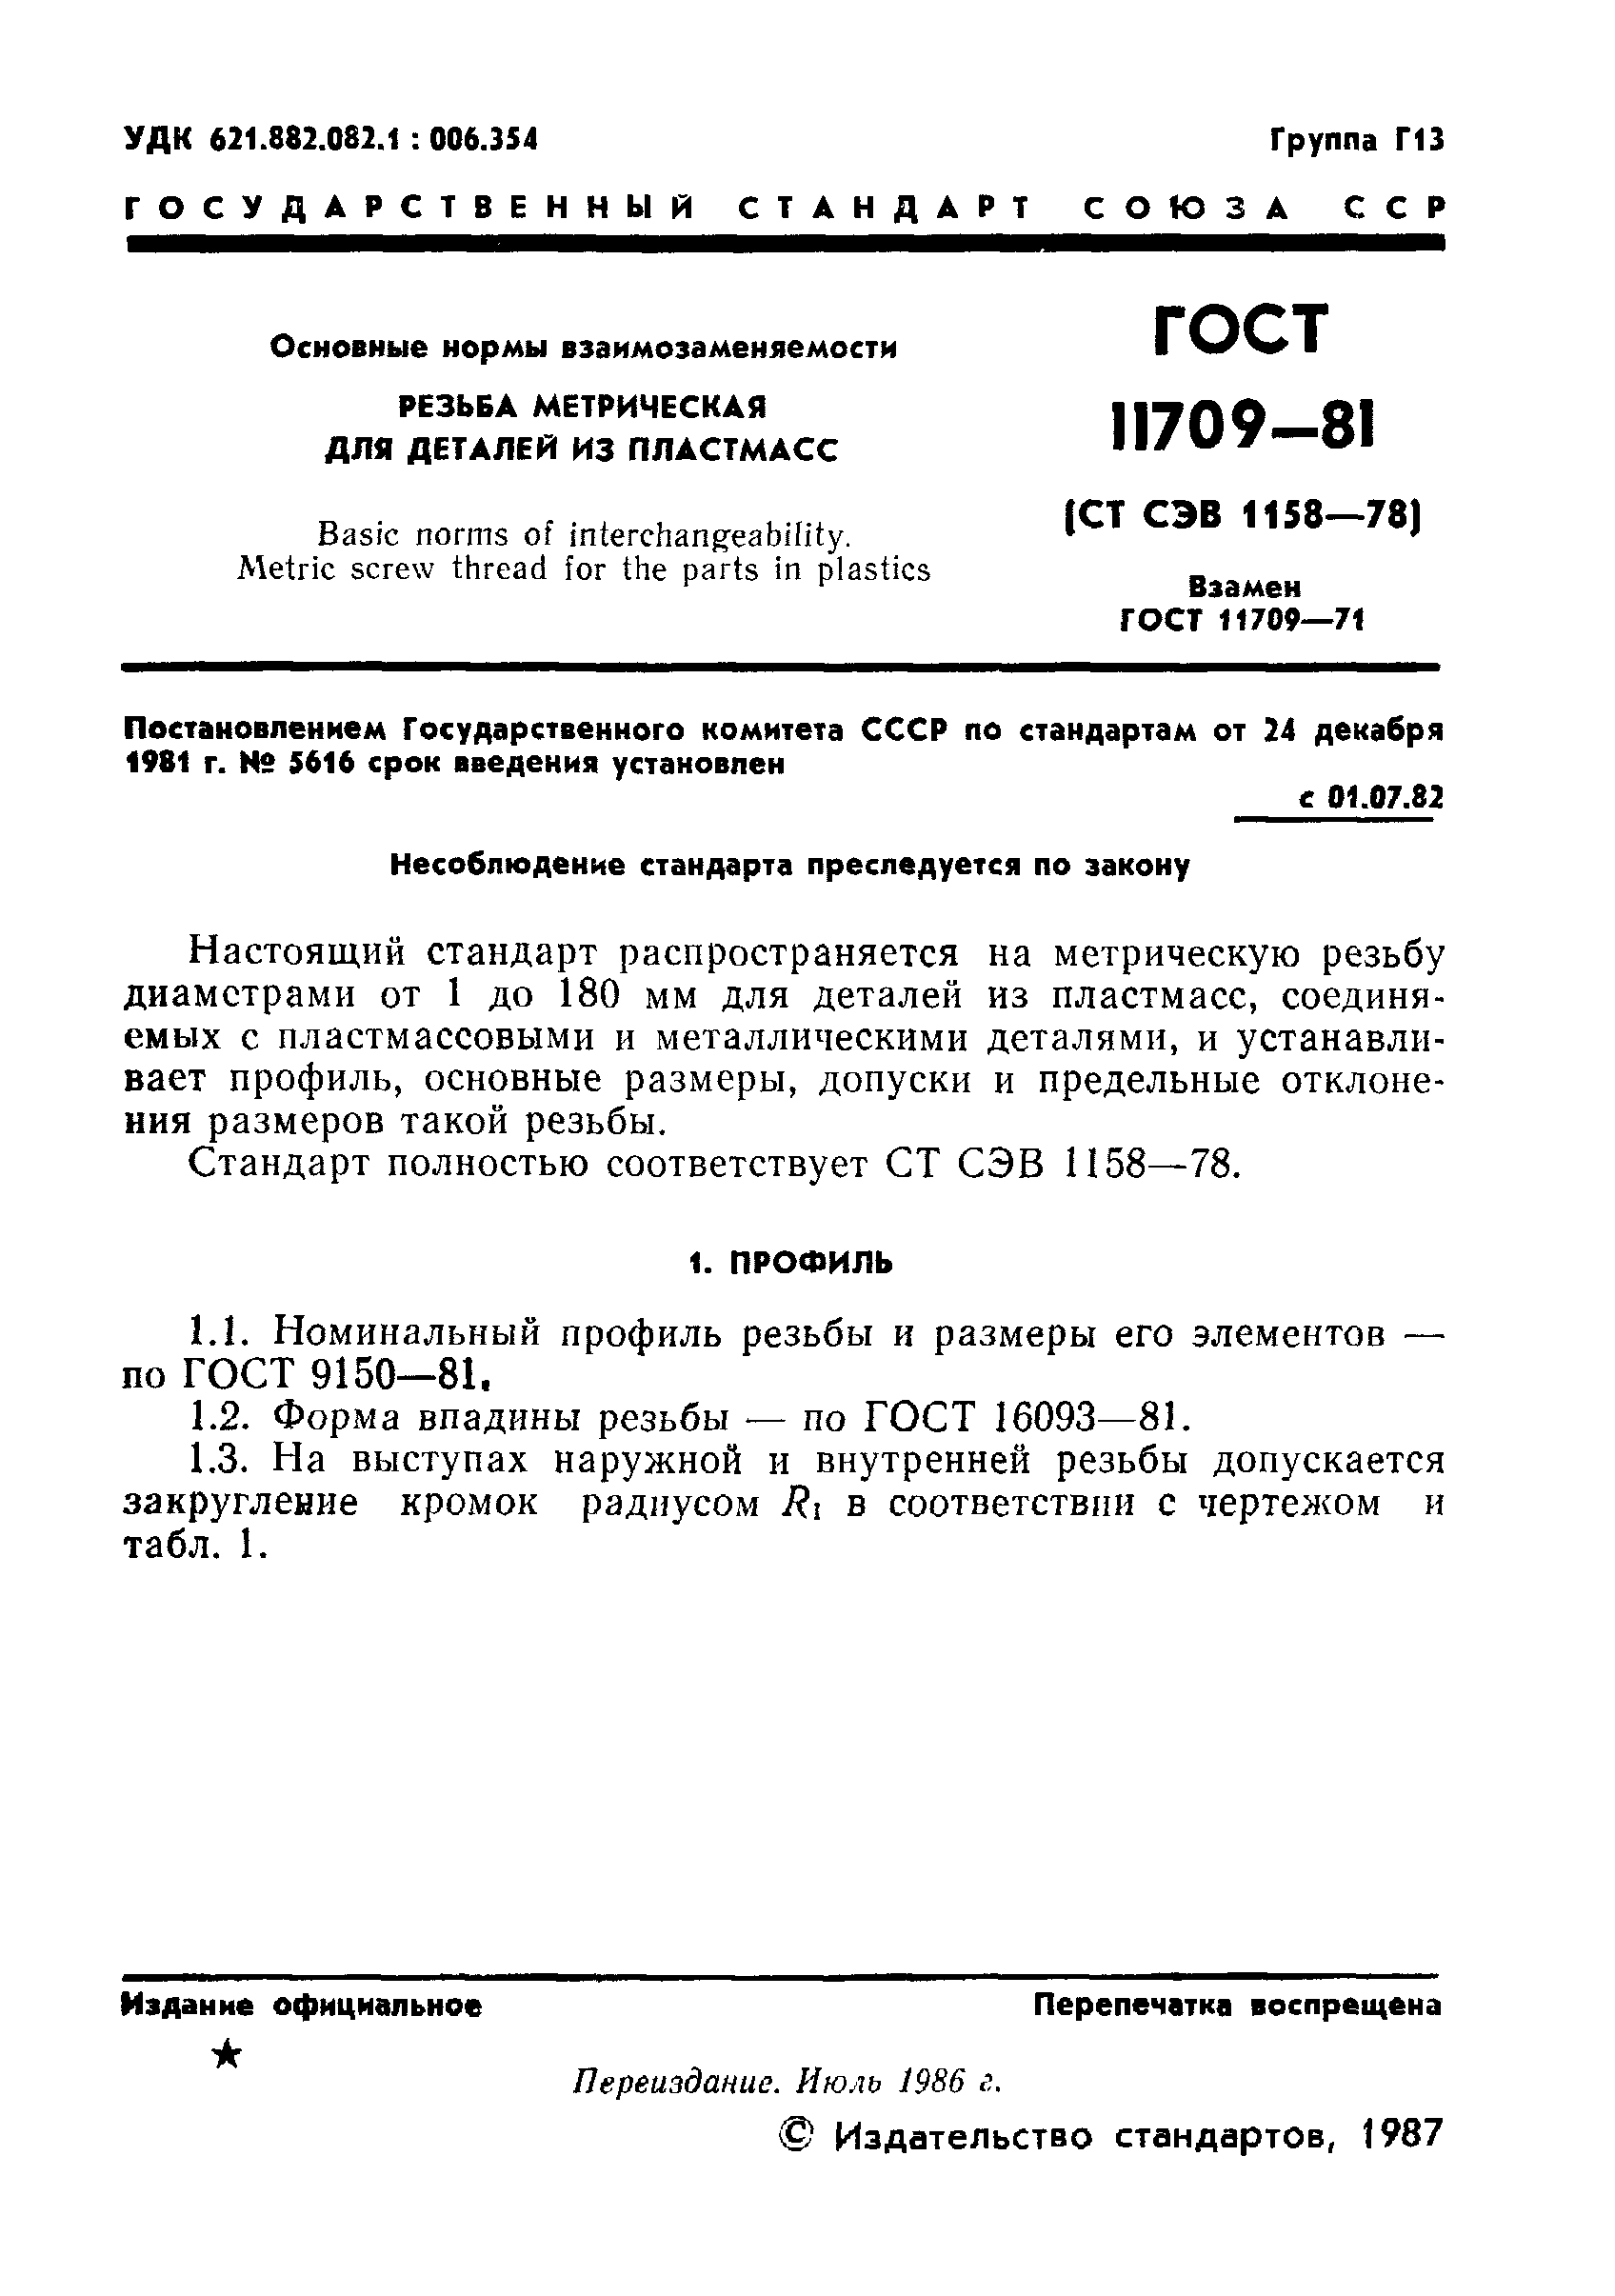 ГОСТ 11709-81